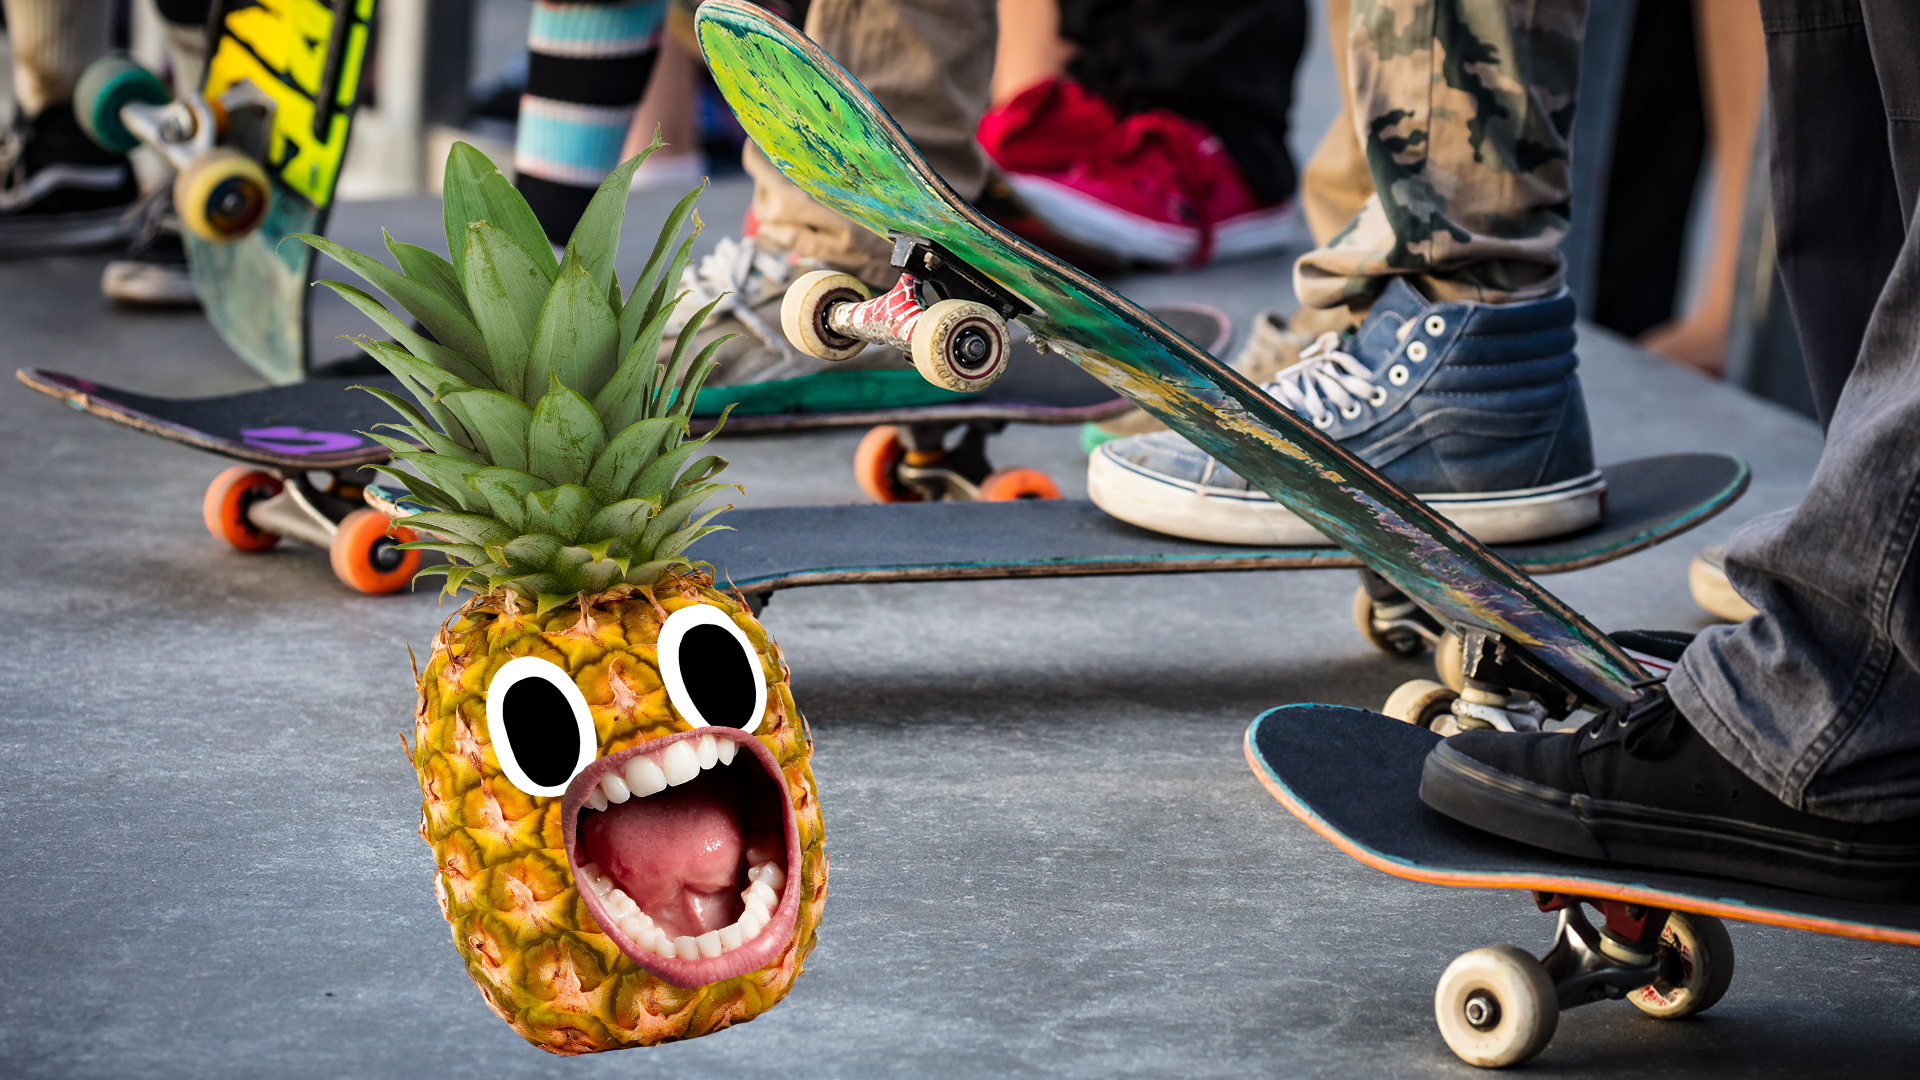 Screaming pineapple next to skateboarder's feet